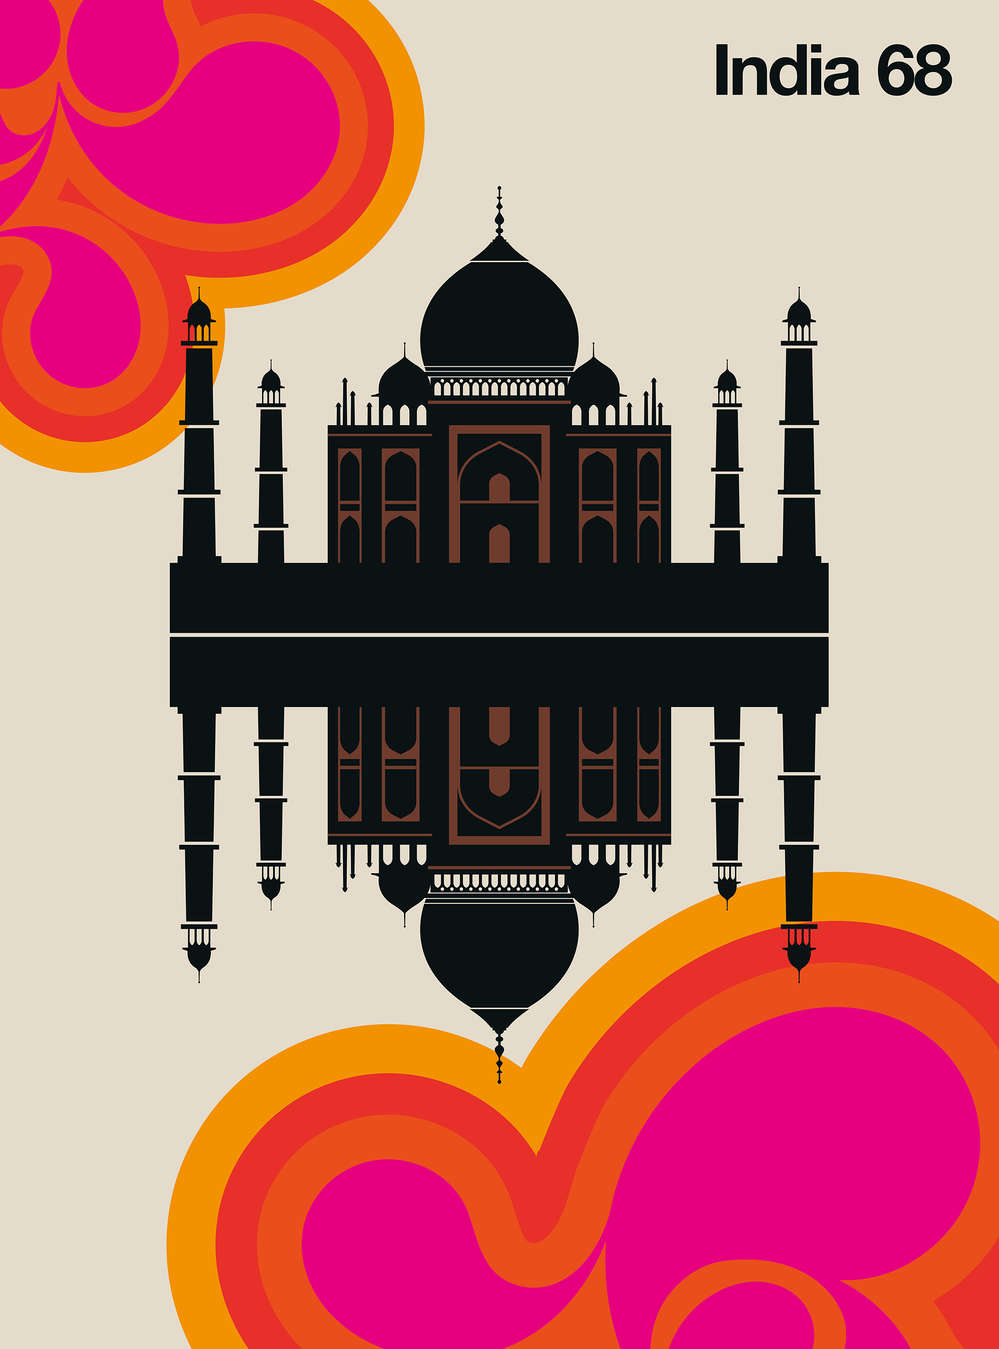             Fototapete Indien 60er Retro Design Taj Mahal
        